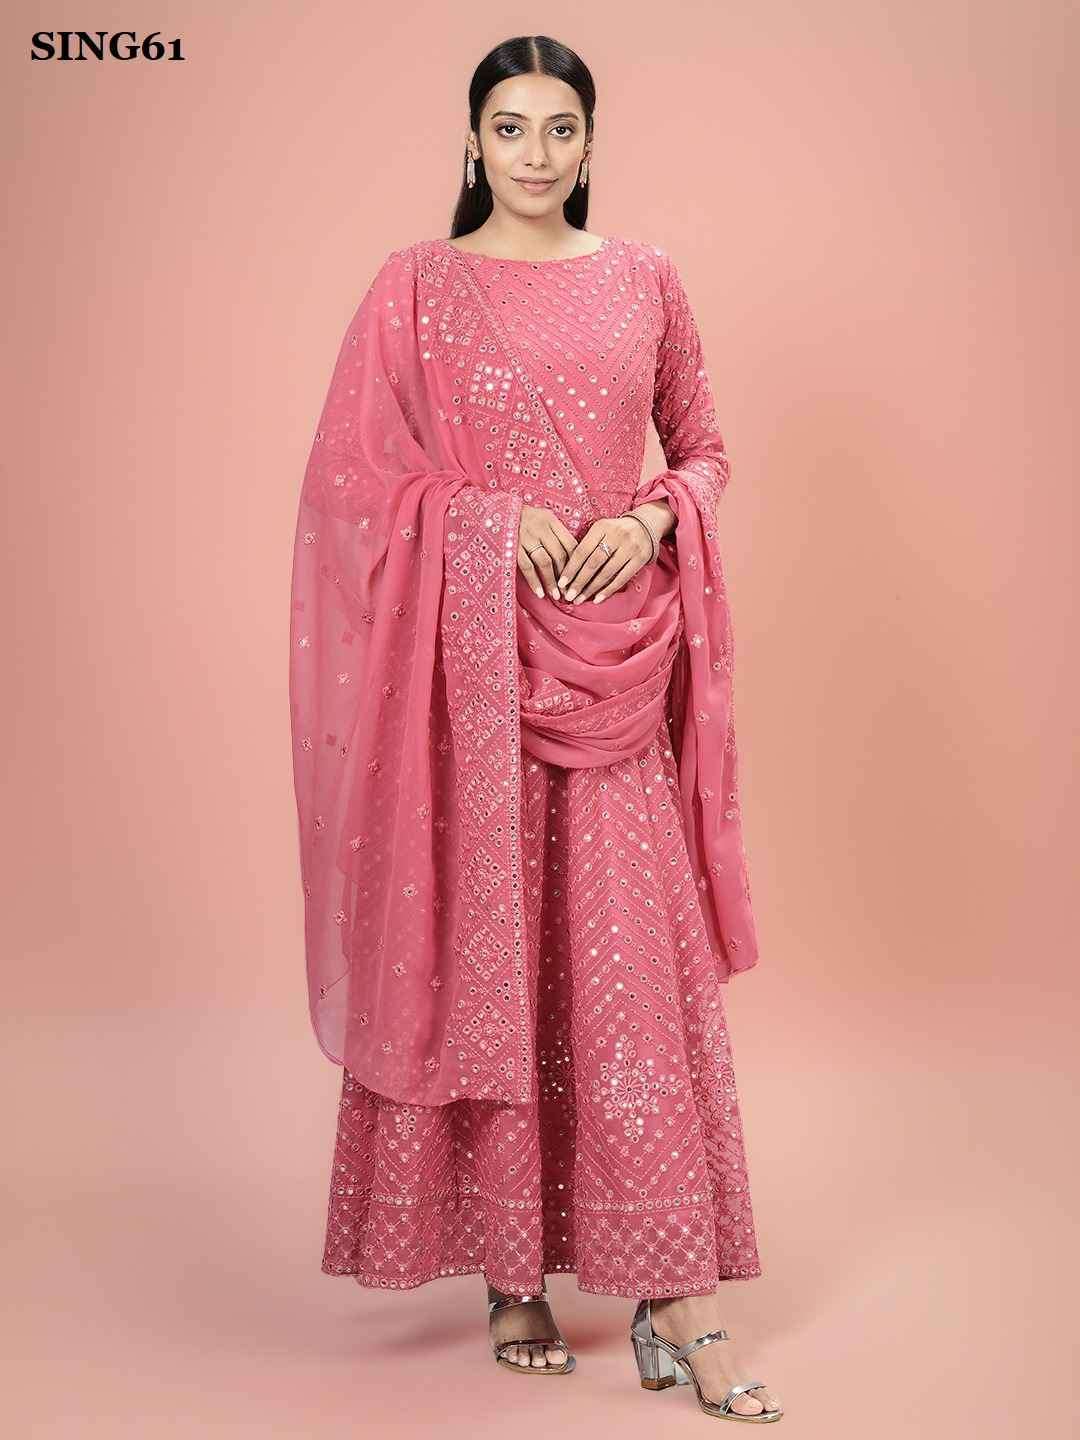 Arya Designs Sing 61 Latest Style Partywear Gown Dupatta Set New Designs